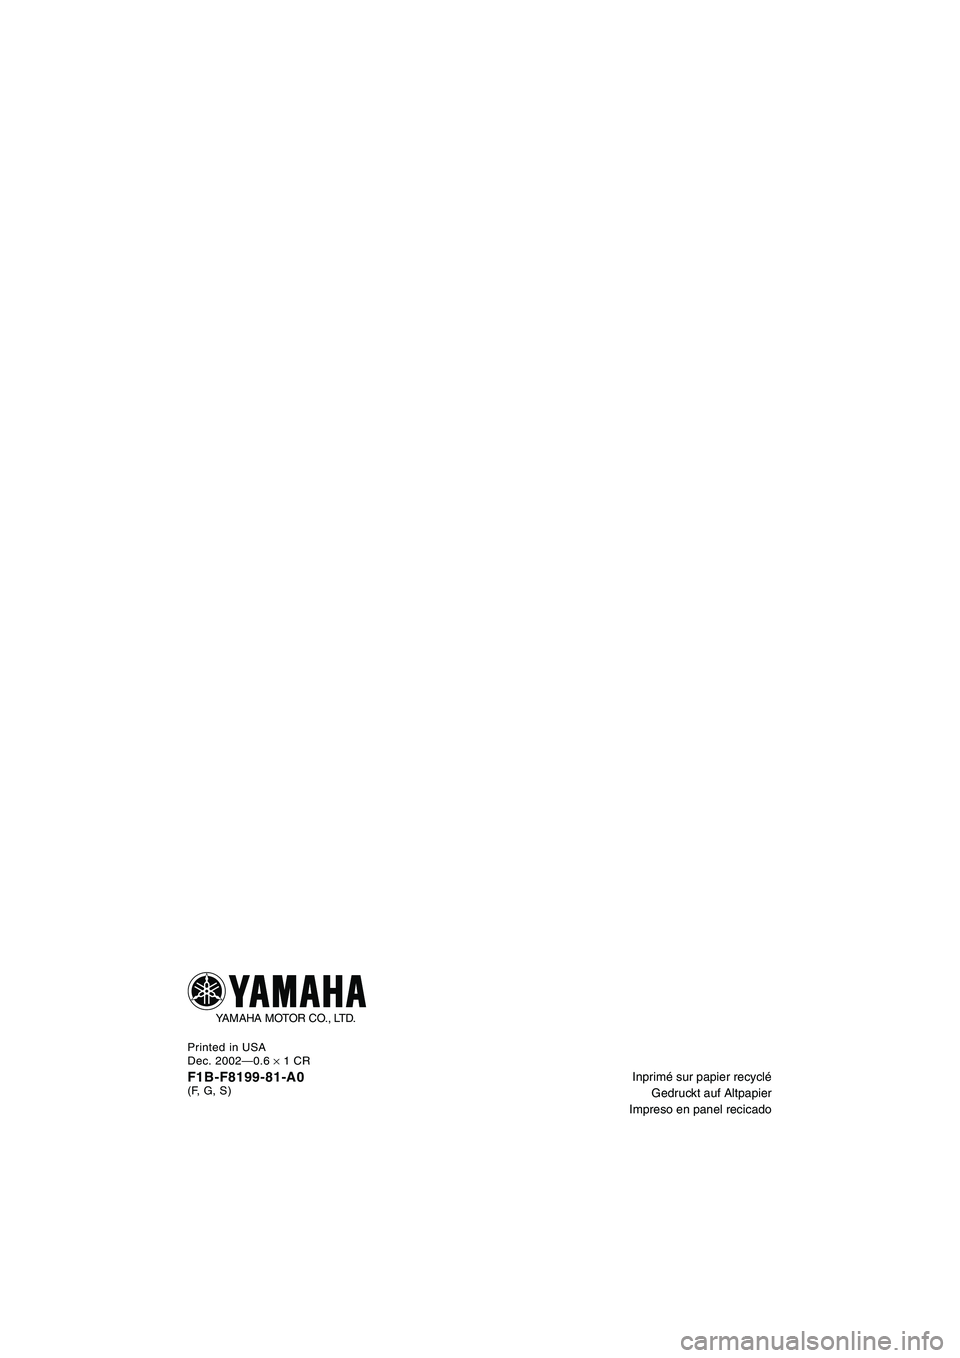 YAMAHA FX 2003  Manuale de Empleo (in Spanish) Inprimé sur papier recyclé
Gedruckt auf Altpapier
Impreso en panel recicado
Printed in USA
Dec. 2002—0.6 
× 1 CR
F1B-F8199-81-A0(F, G, S)
YAMAHA MOTOR CO., LTD.
UF1B81A0.book  Page 1  Tuesday, No